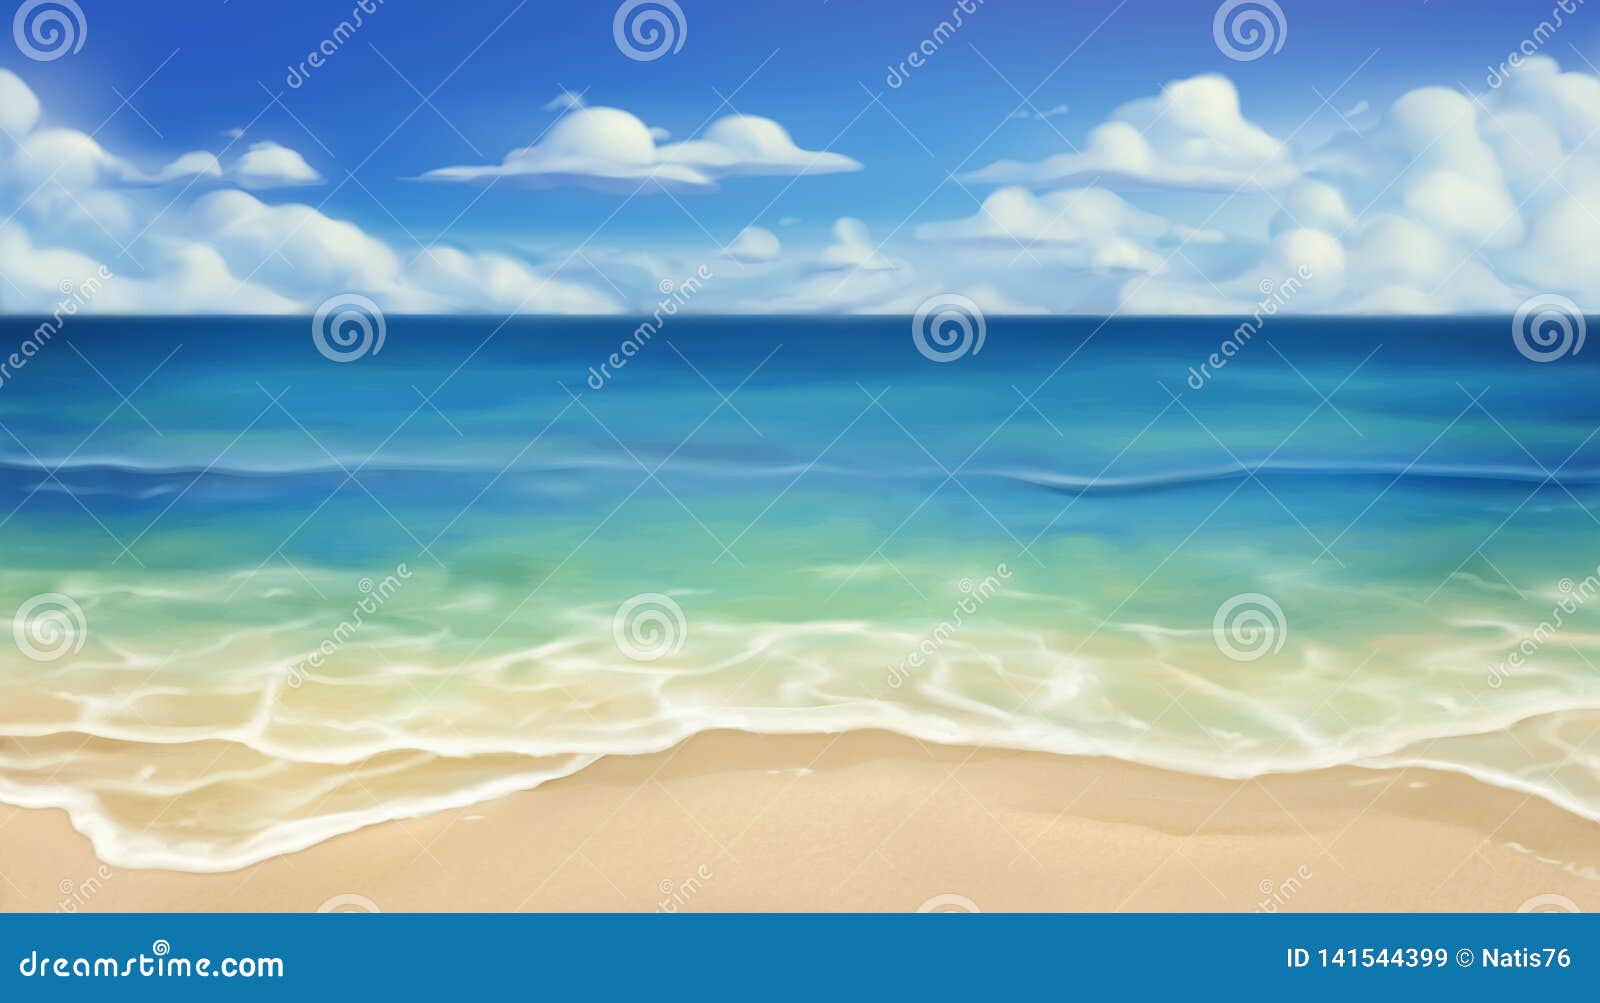 sea beach. sand and wave.  background